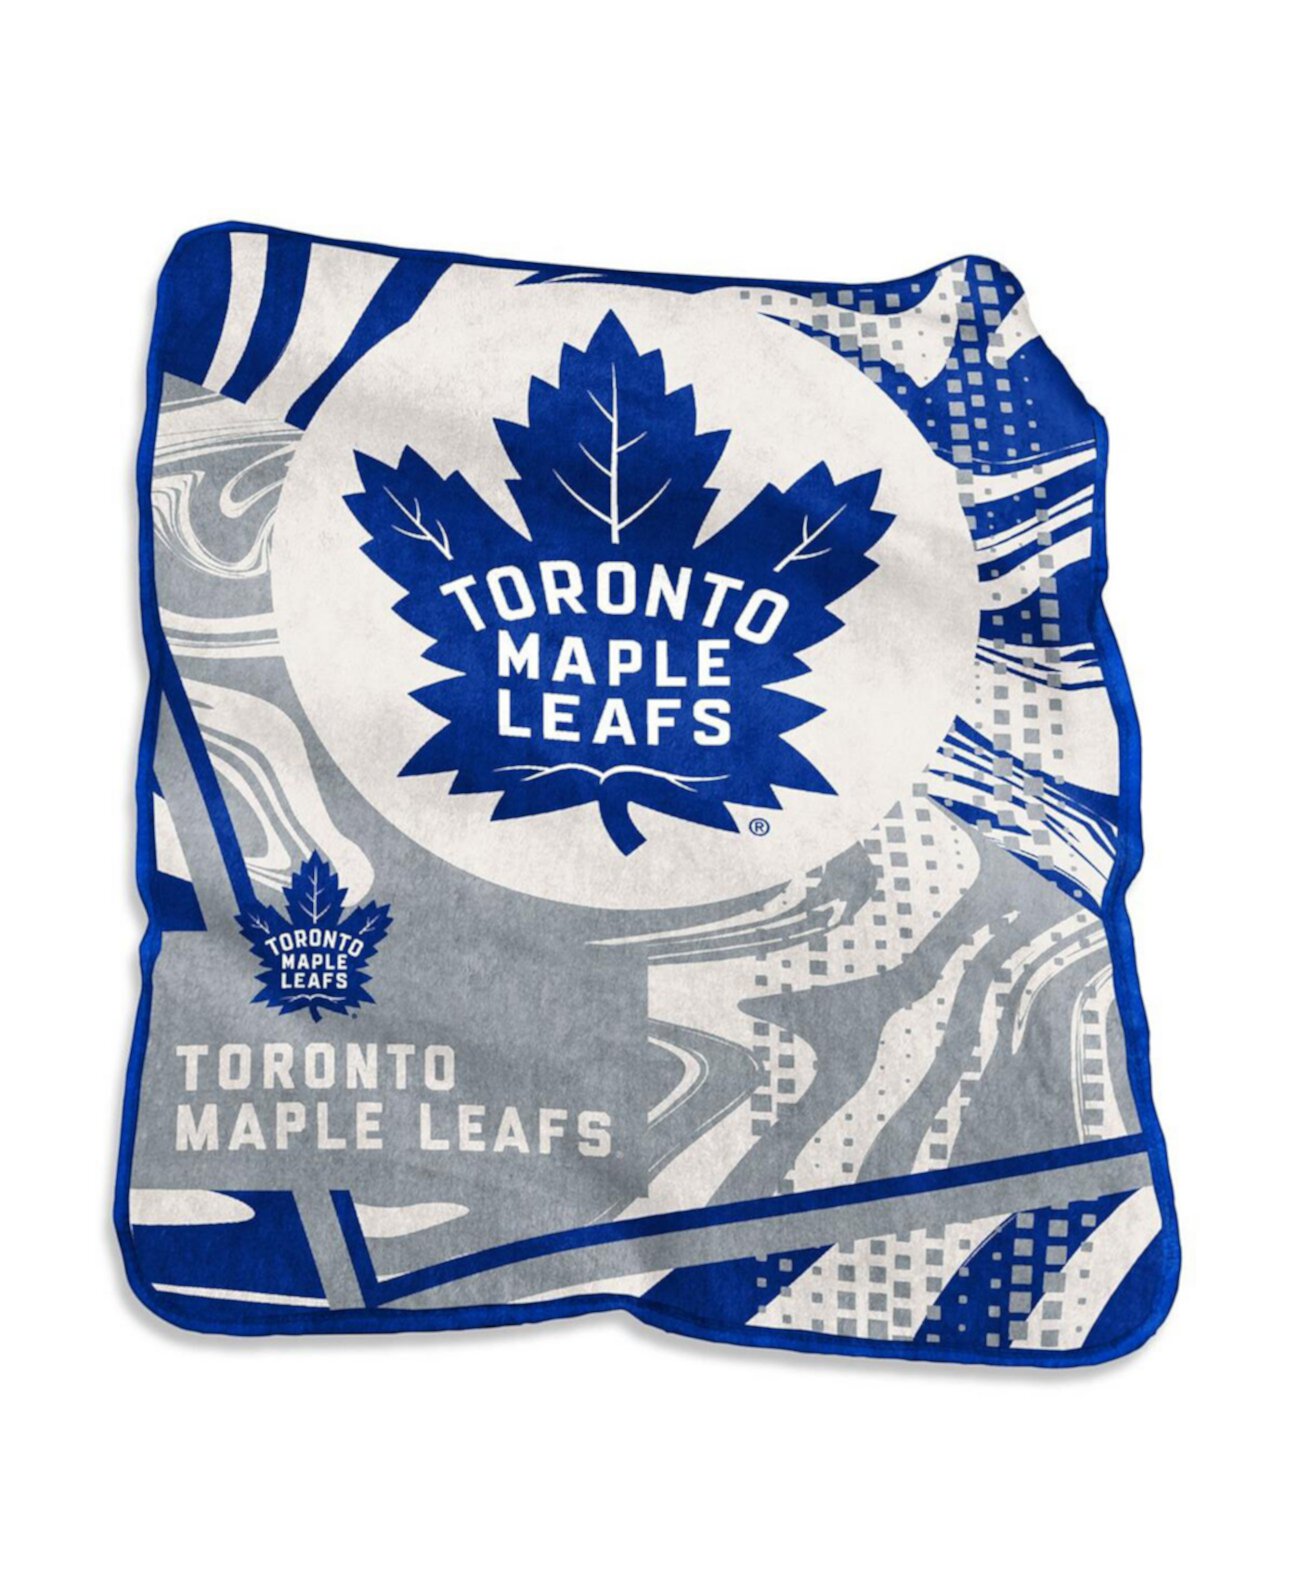 Декоративное одеяло «Торонто Мэйпл Лифс» размером 50 x 60 дюймов с завитками Raschel Logo Brand